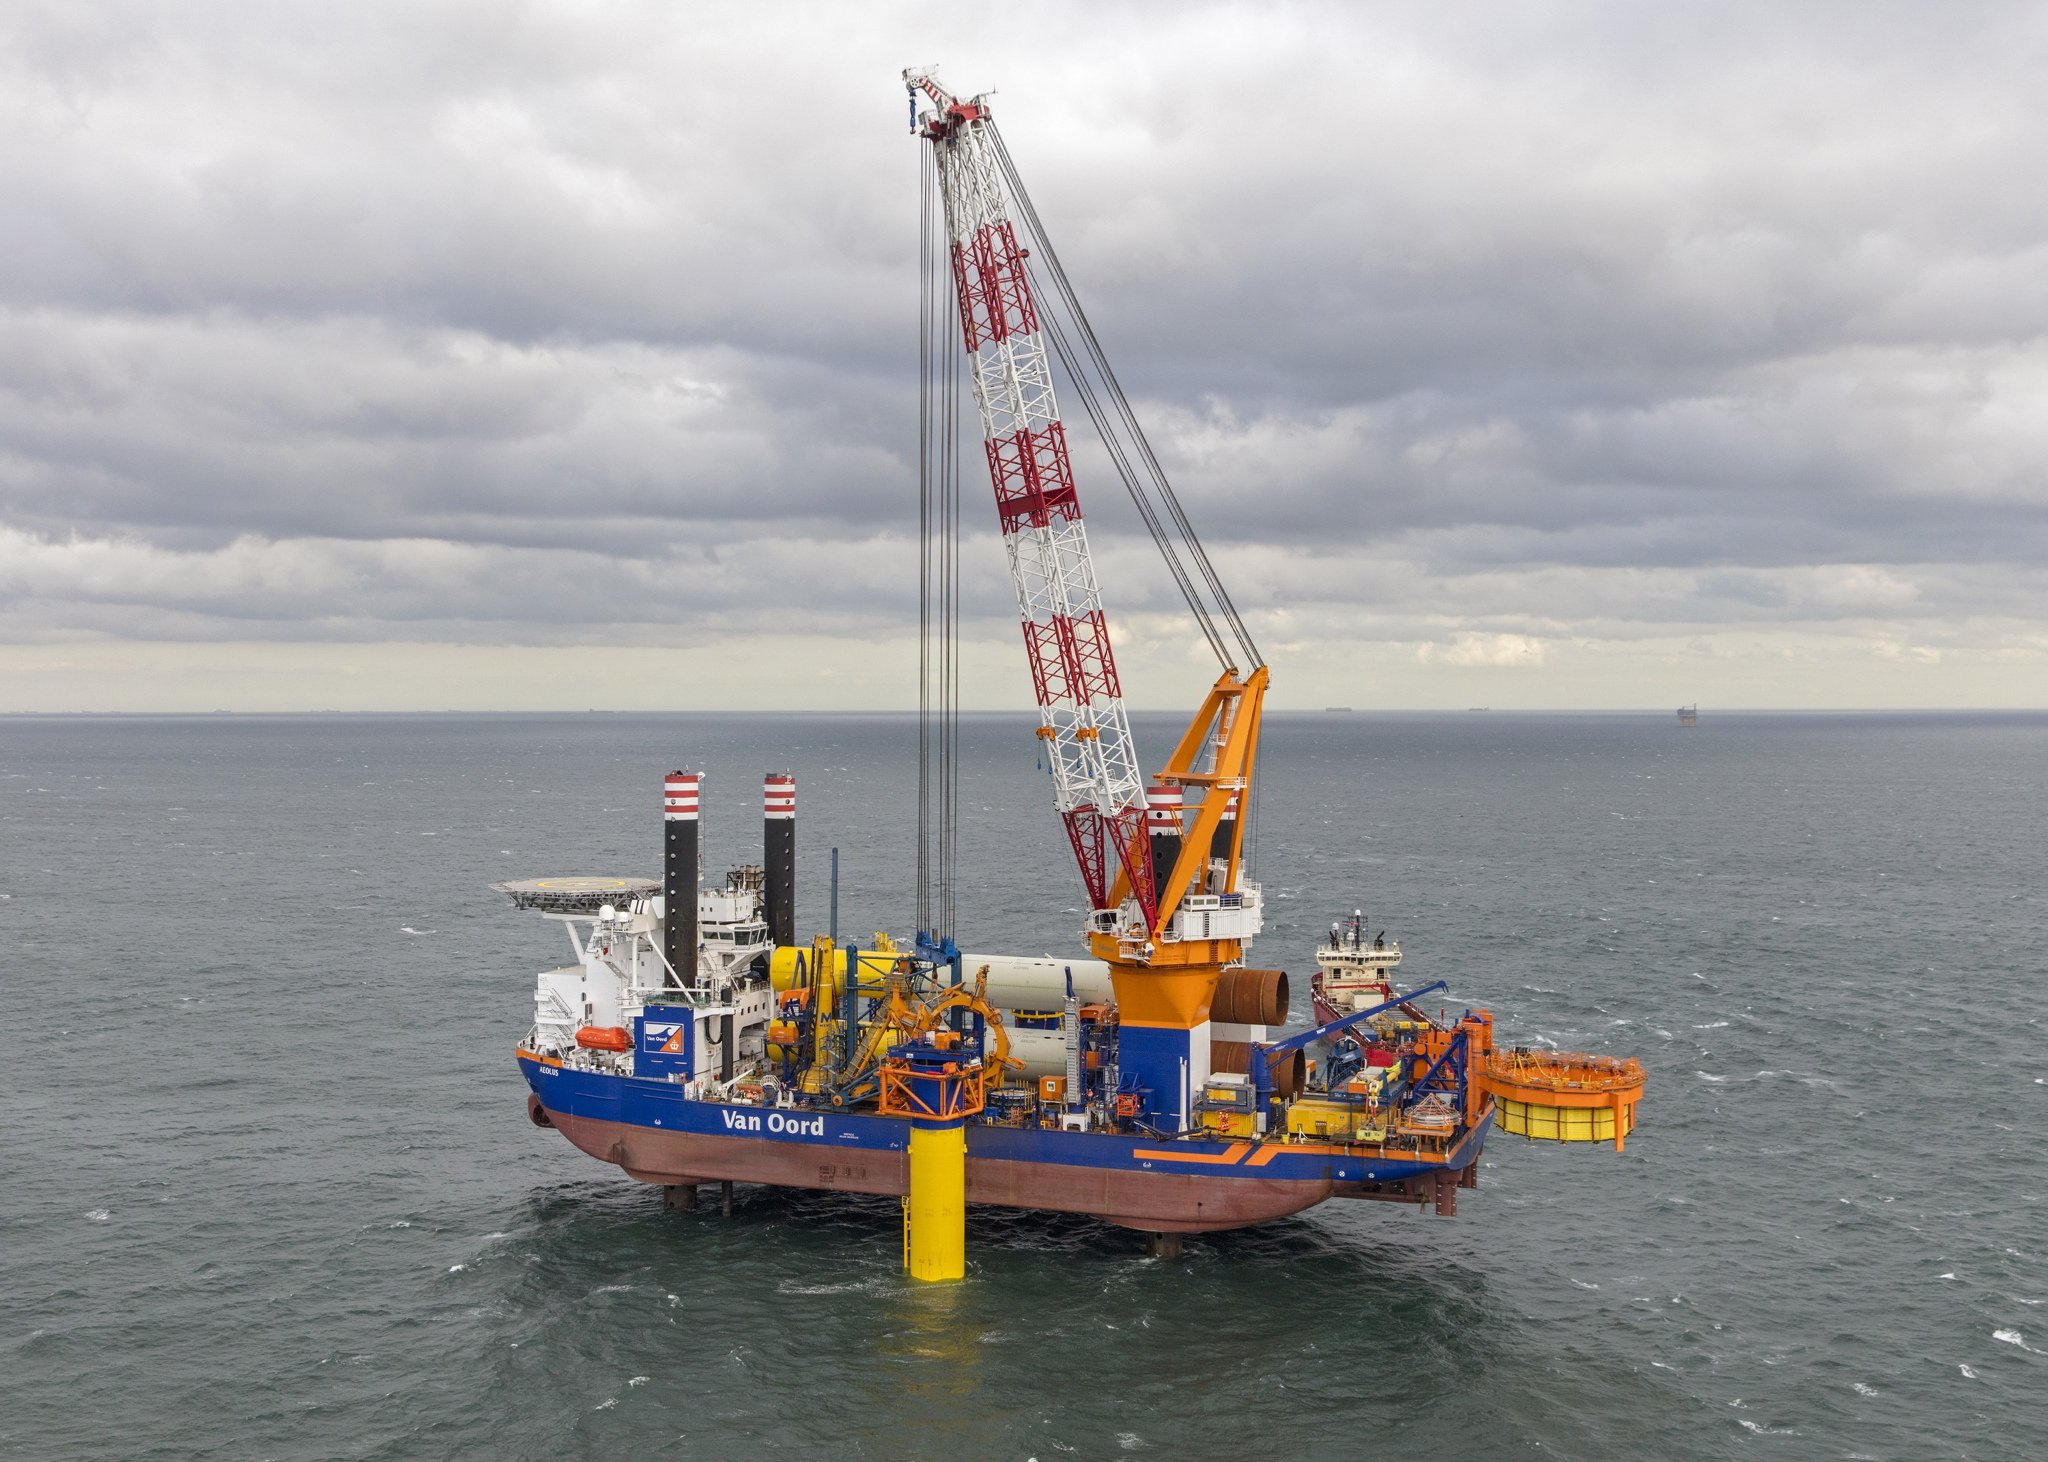 Van Oord's offshore installation vessel Aeolus